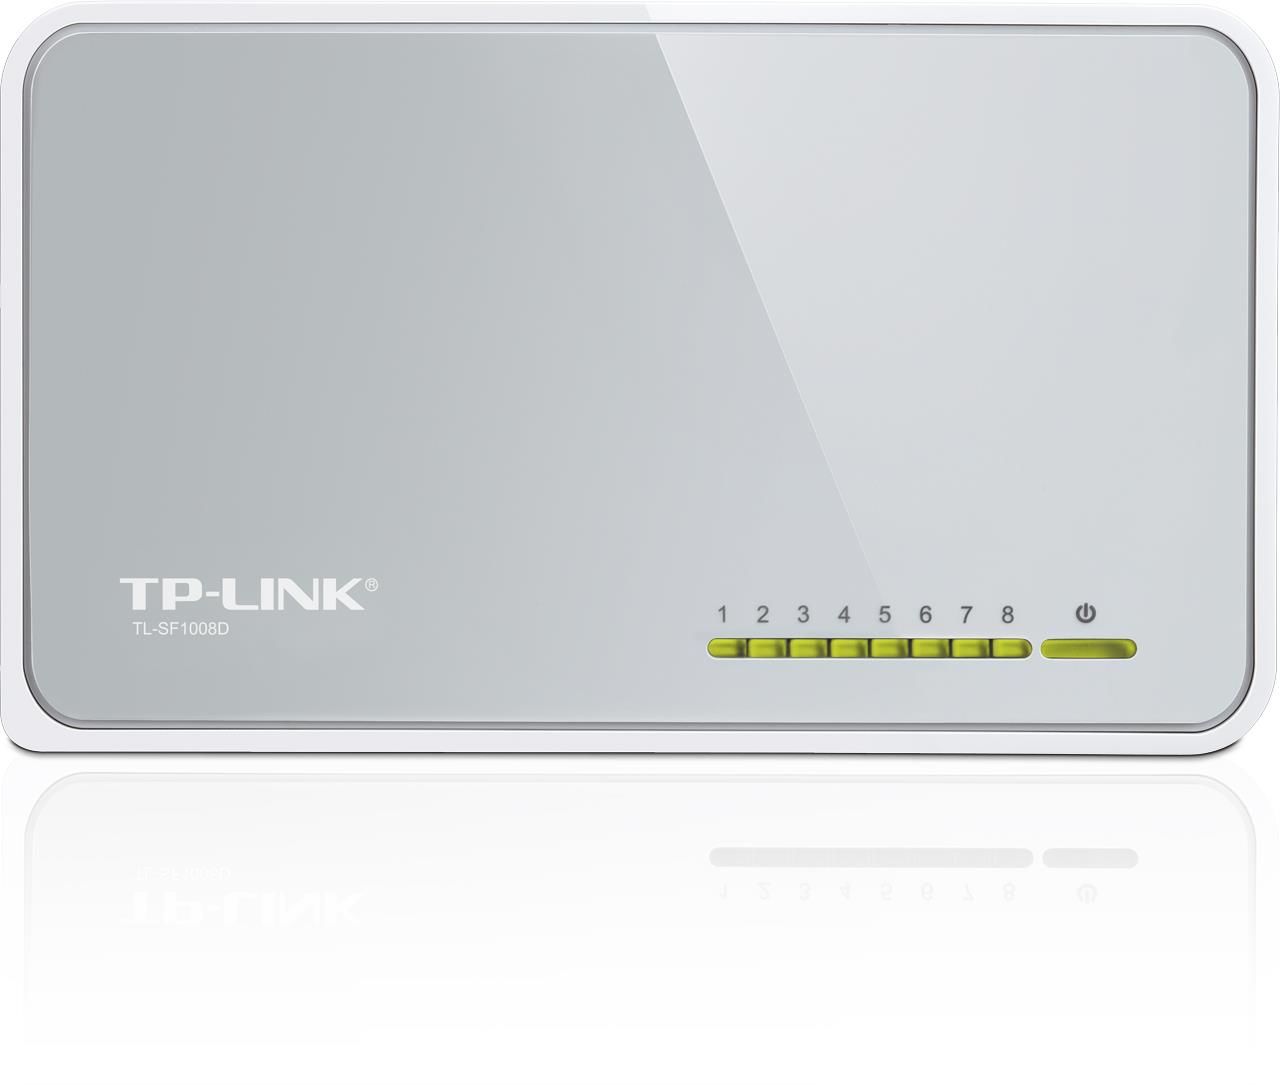 TP-LINK TL-SF1008D 8 PORT 10/100 SWITCH